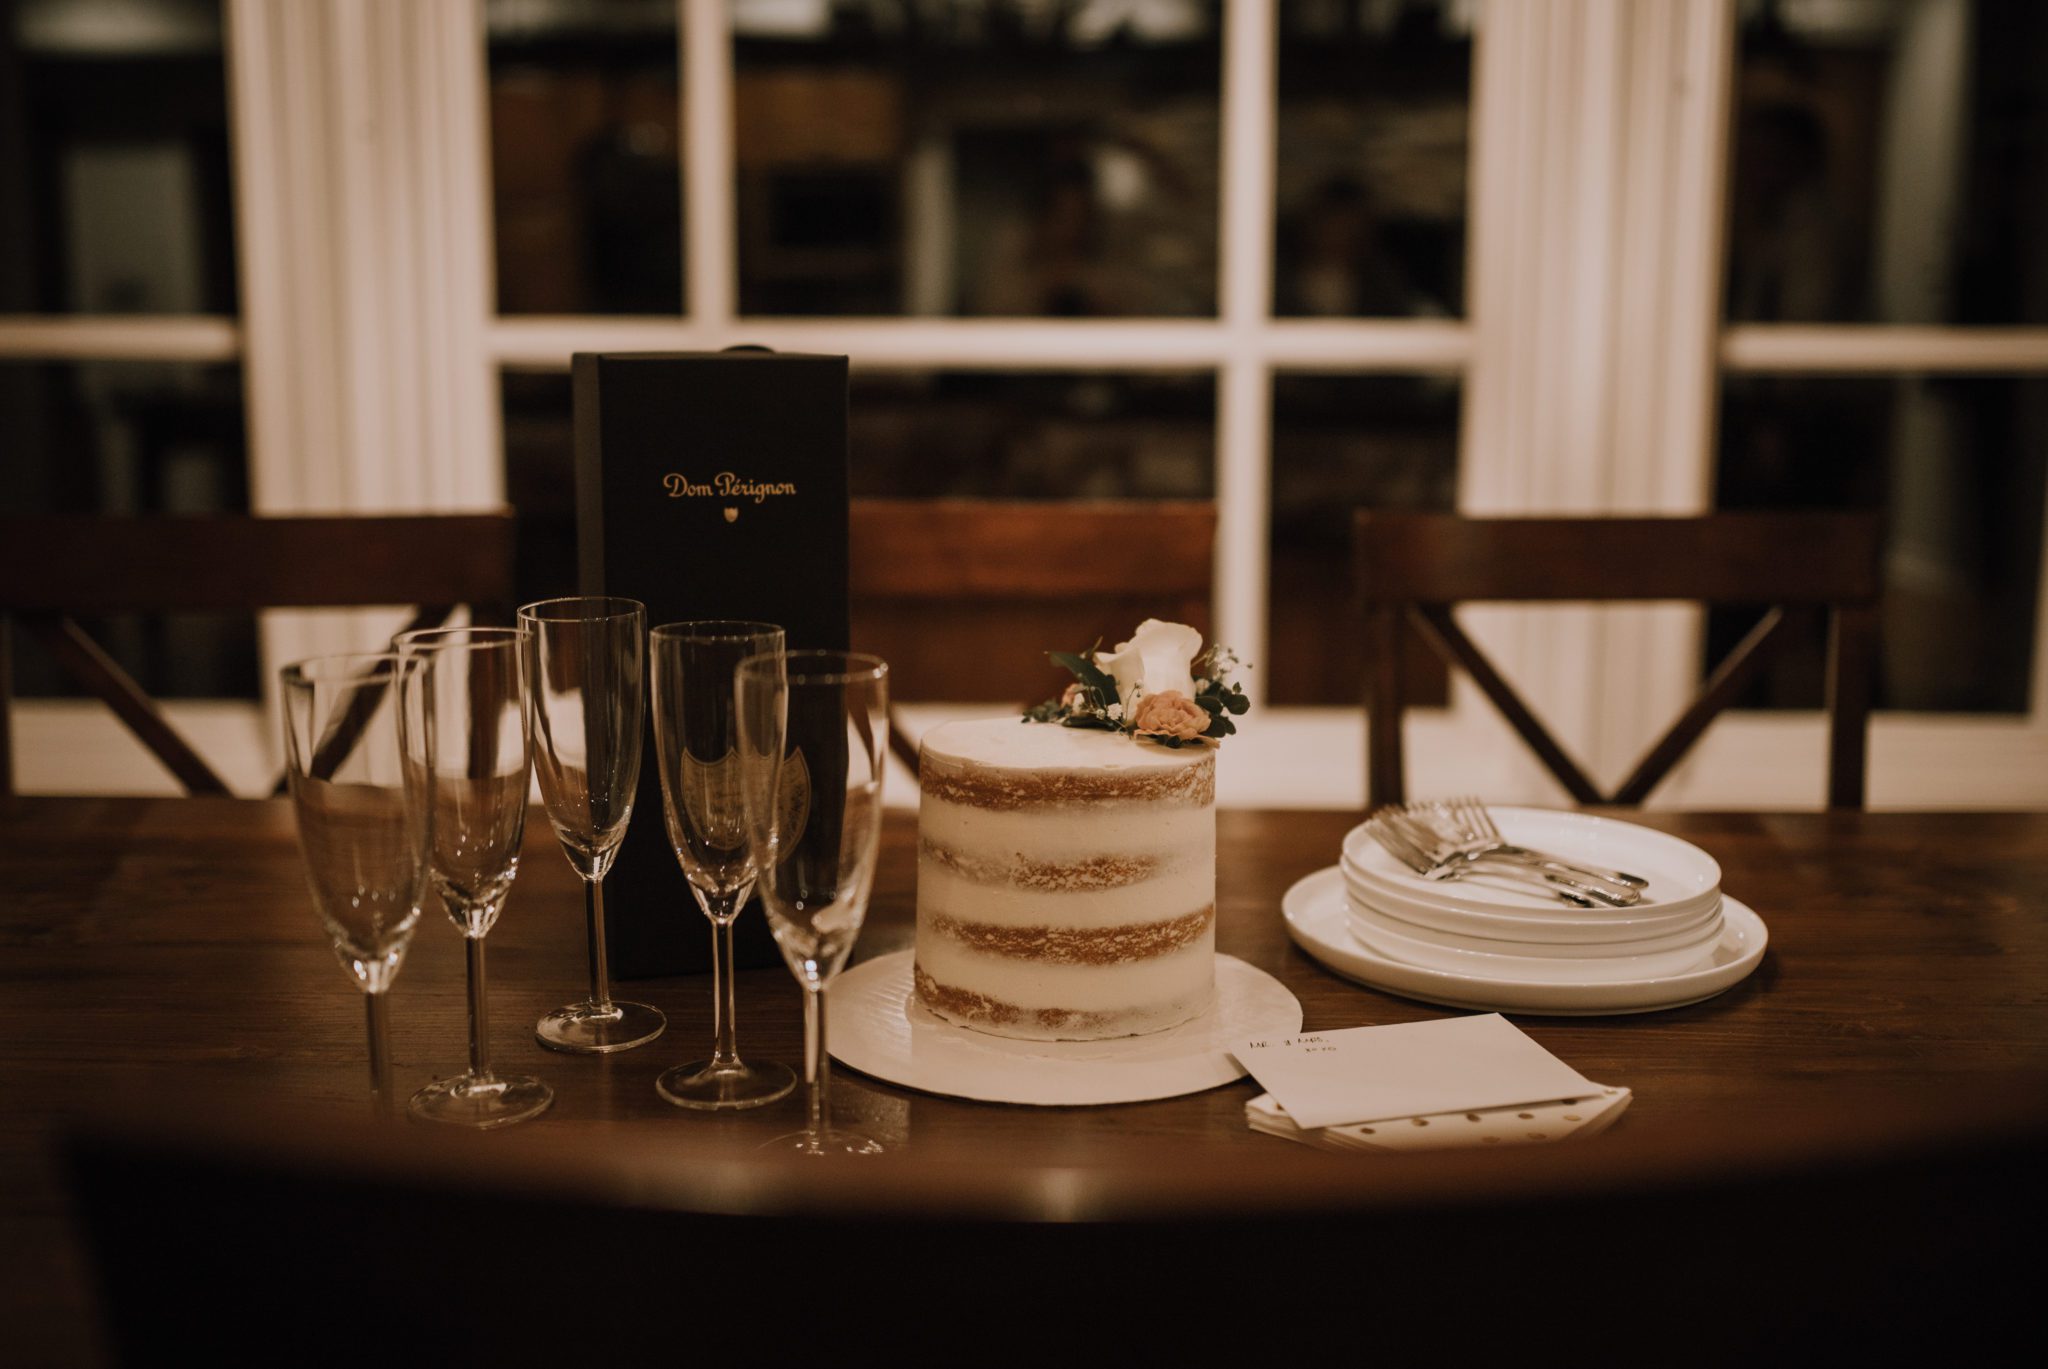 Single tiered white wedding cake